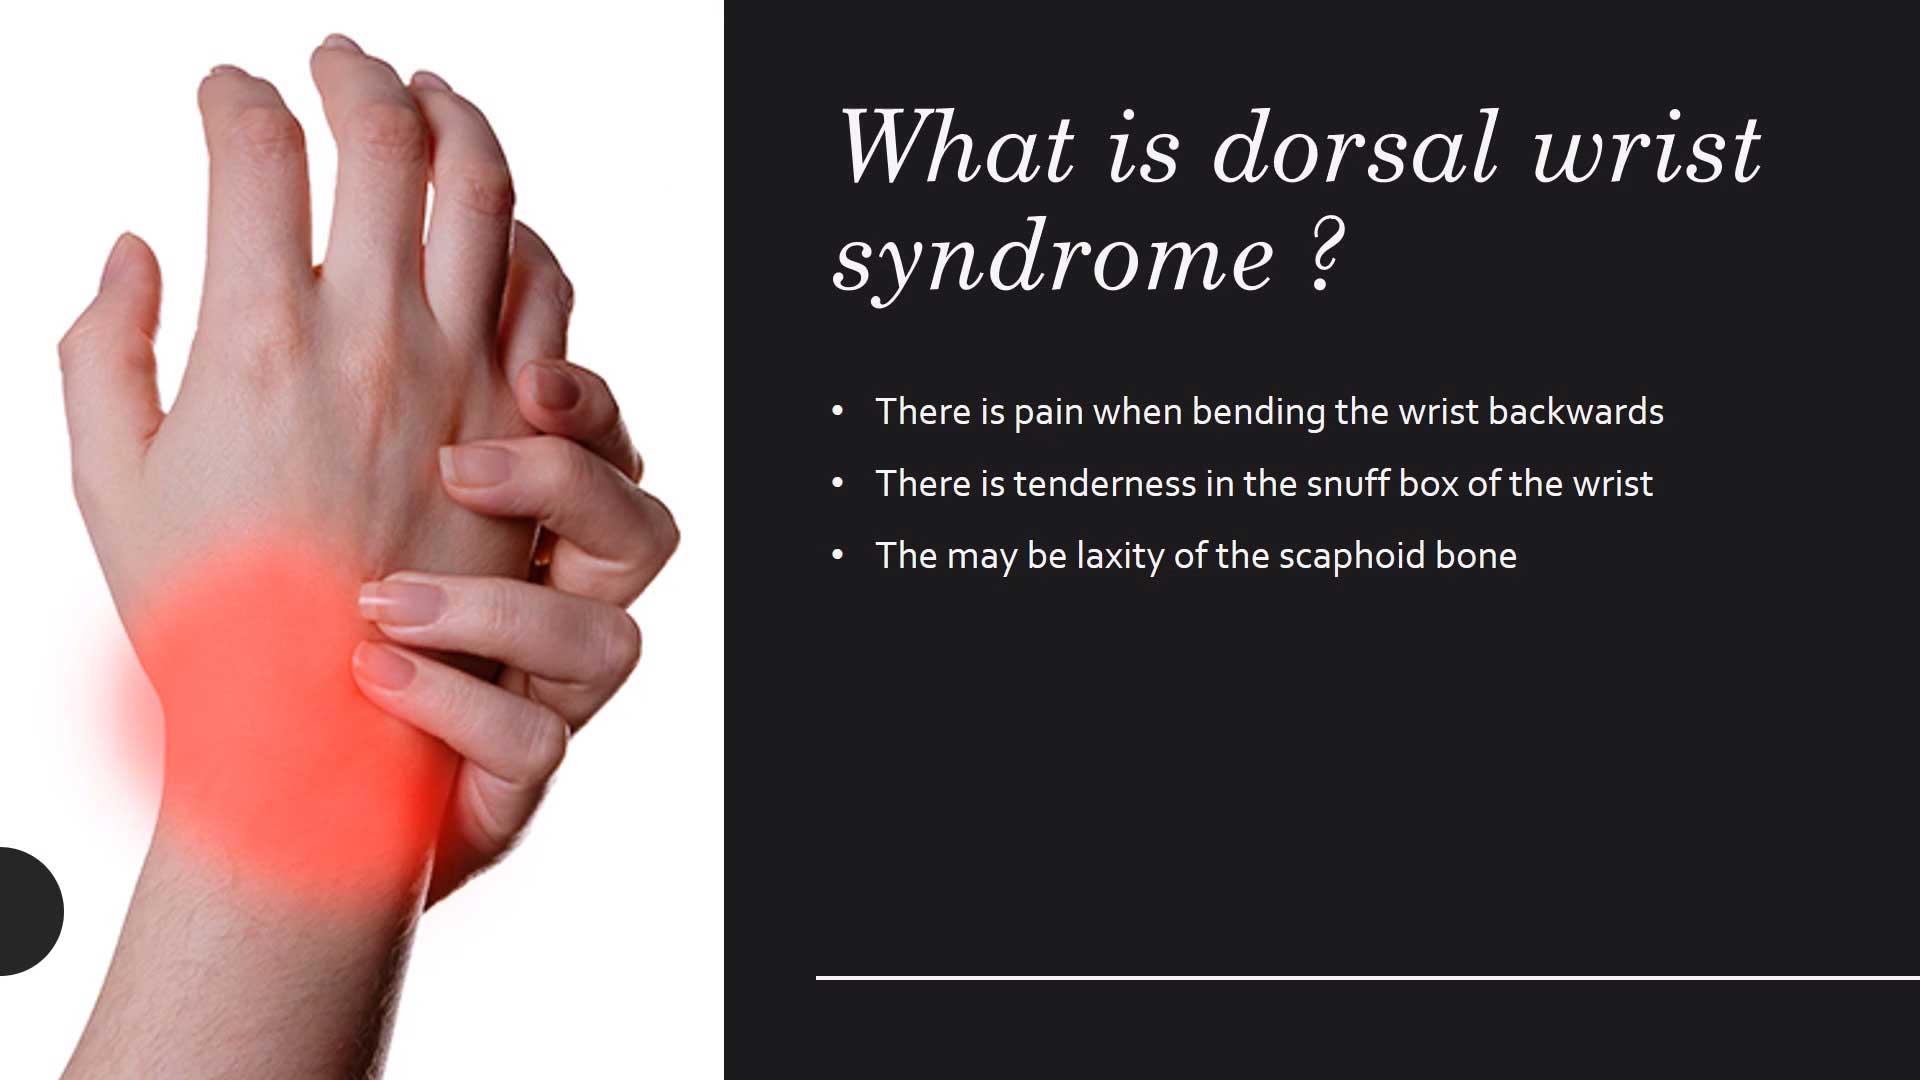 dorsal wrist syndrome